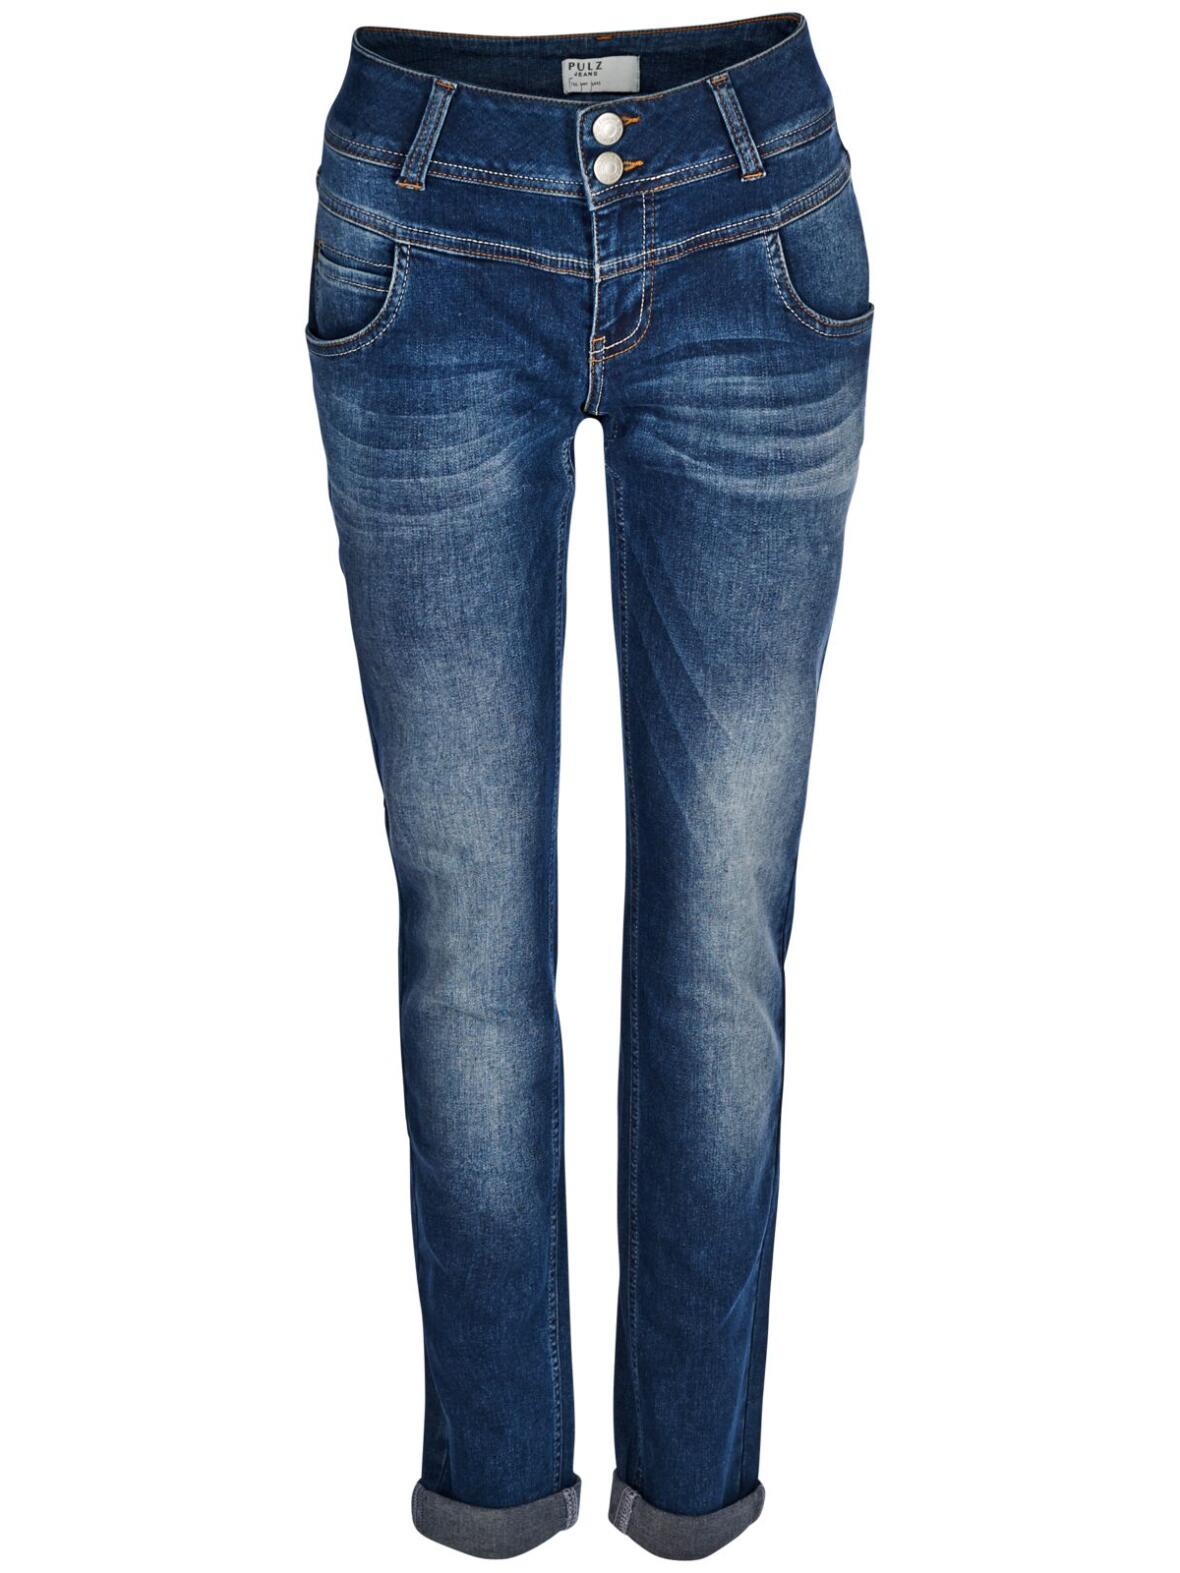 Boutique Pulz Haya jeans